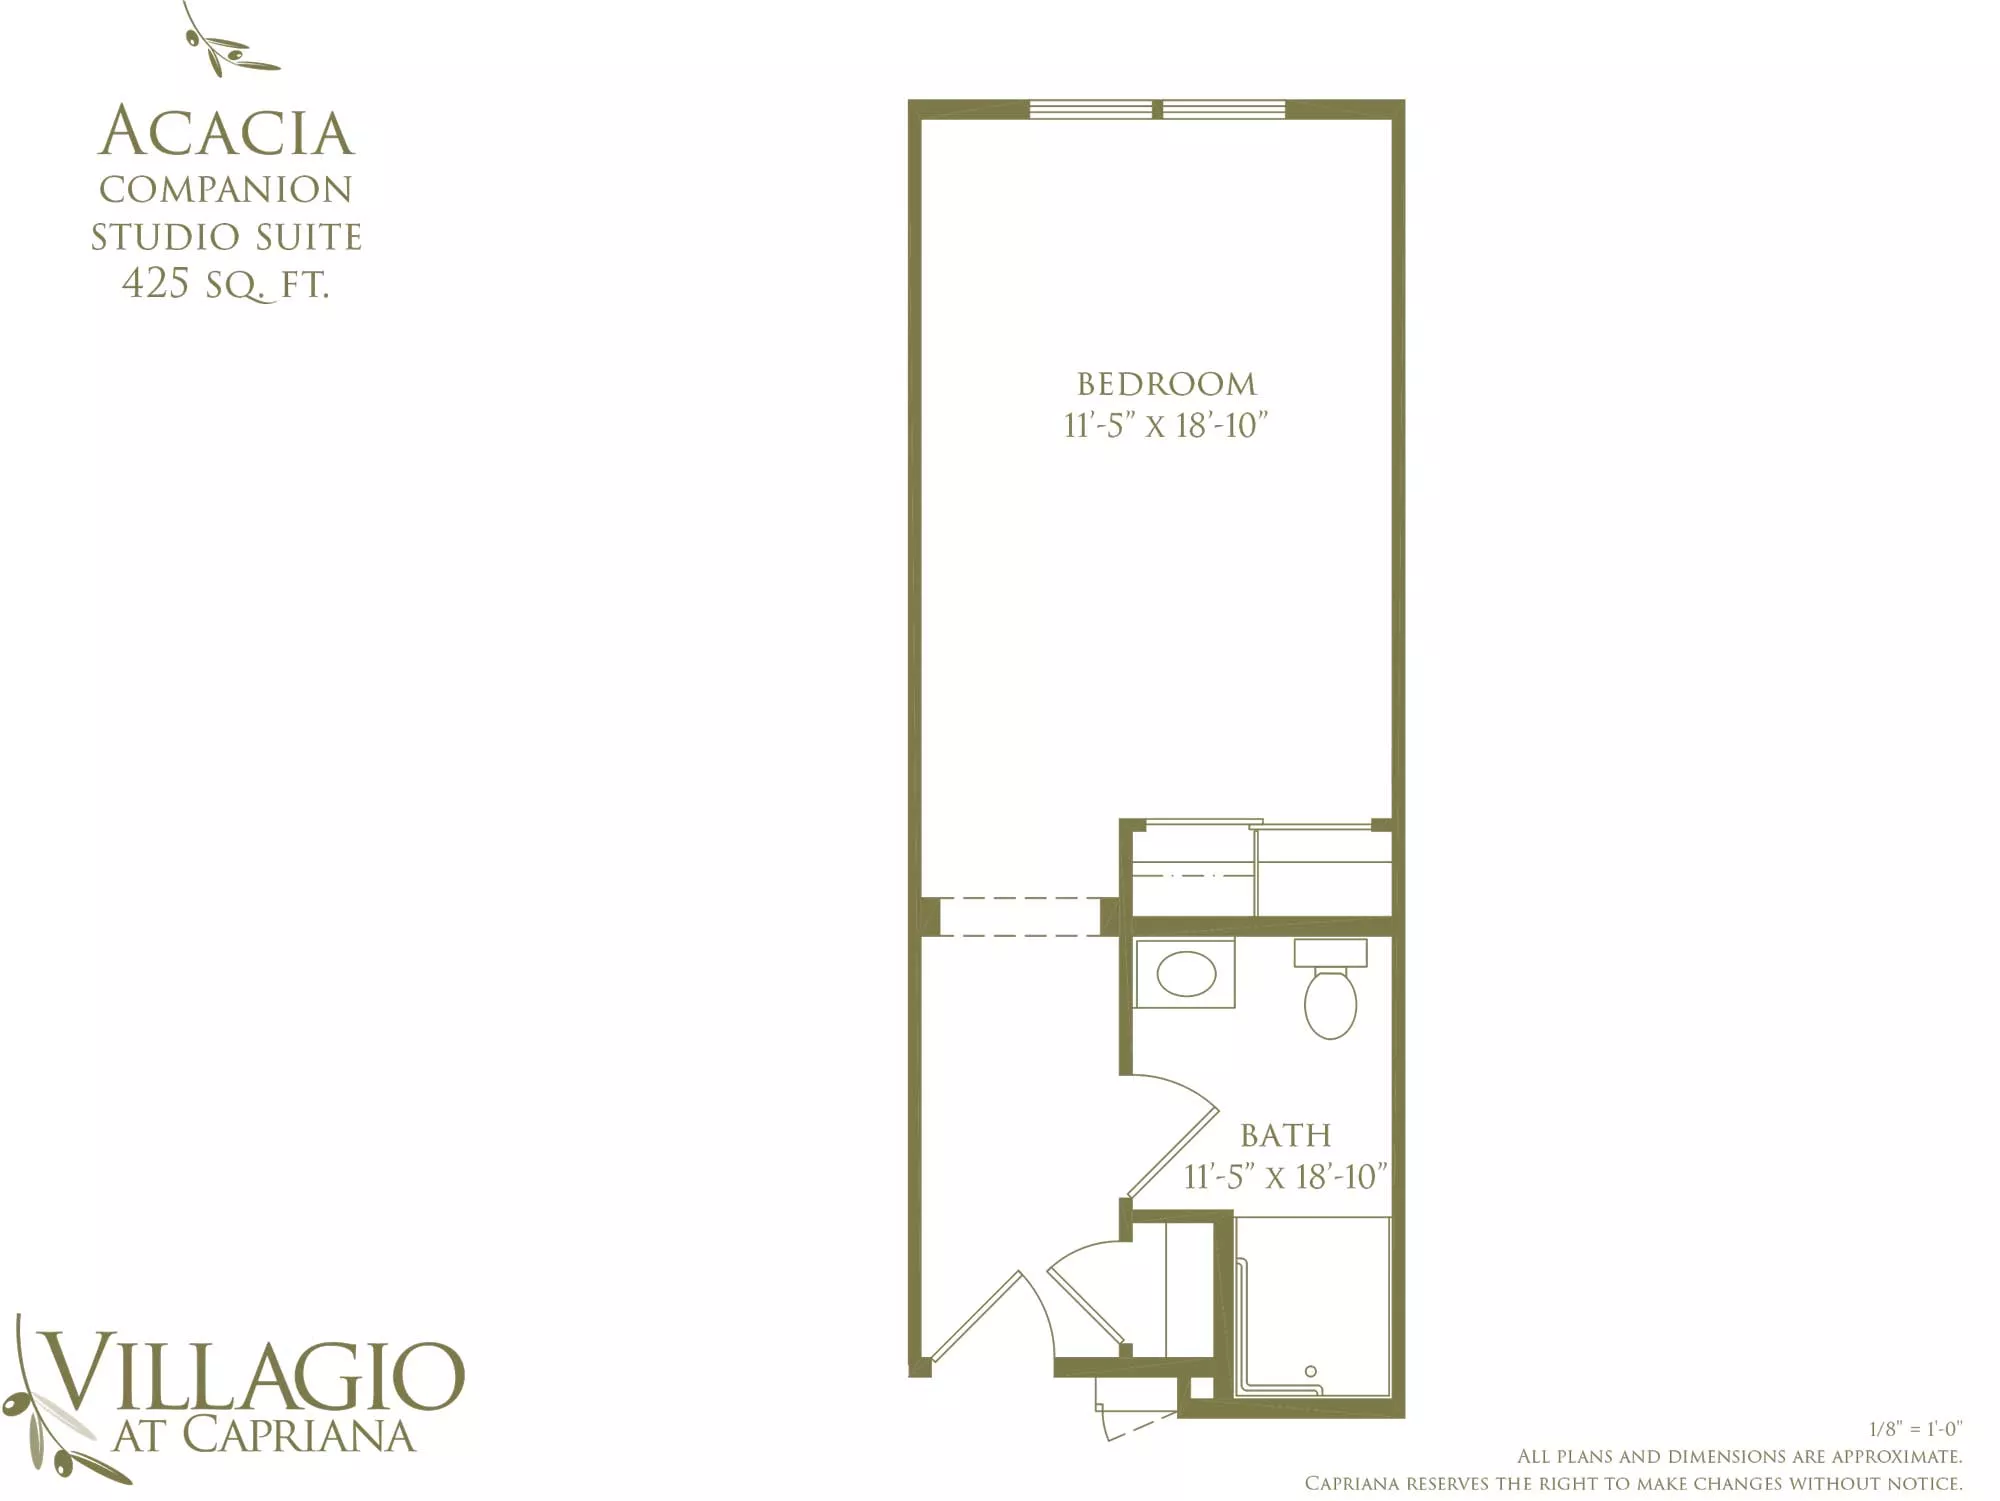 Acacia companion studio suite floor plan